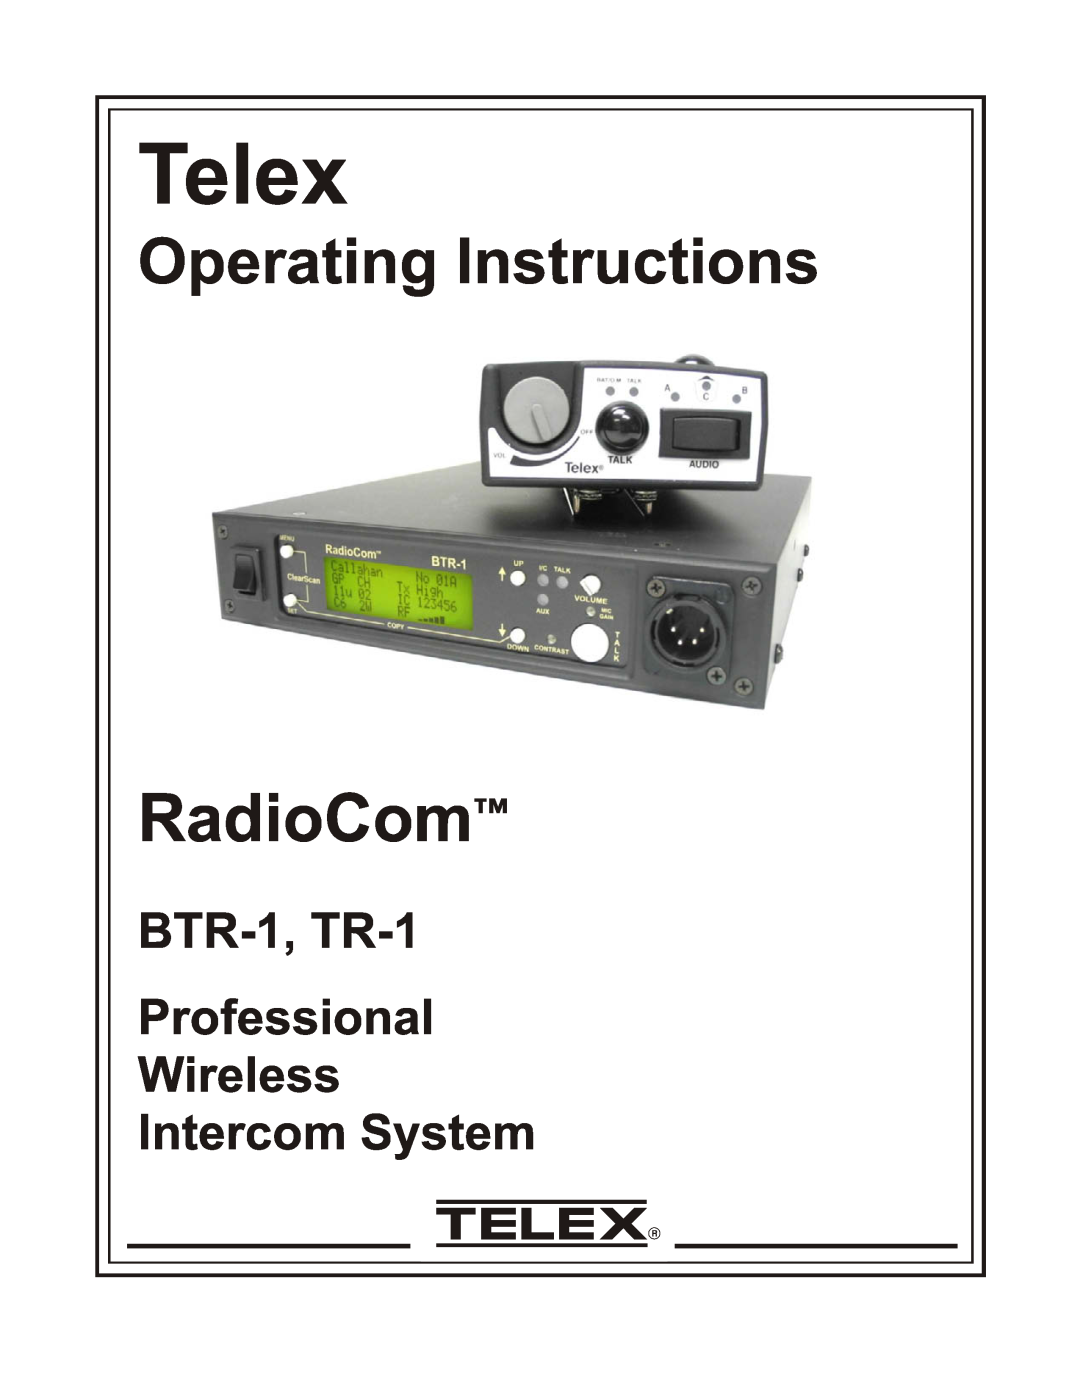 Telex BTR-1 operating instructions Telex, RadioCom, Operating Instructions 